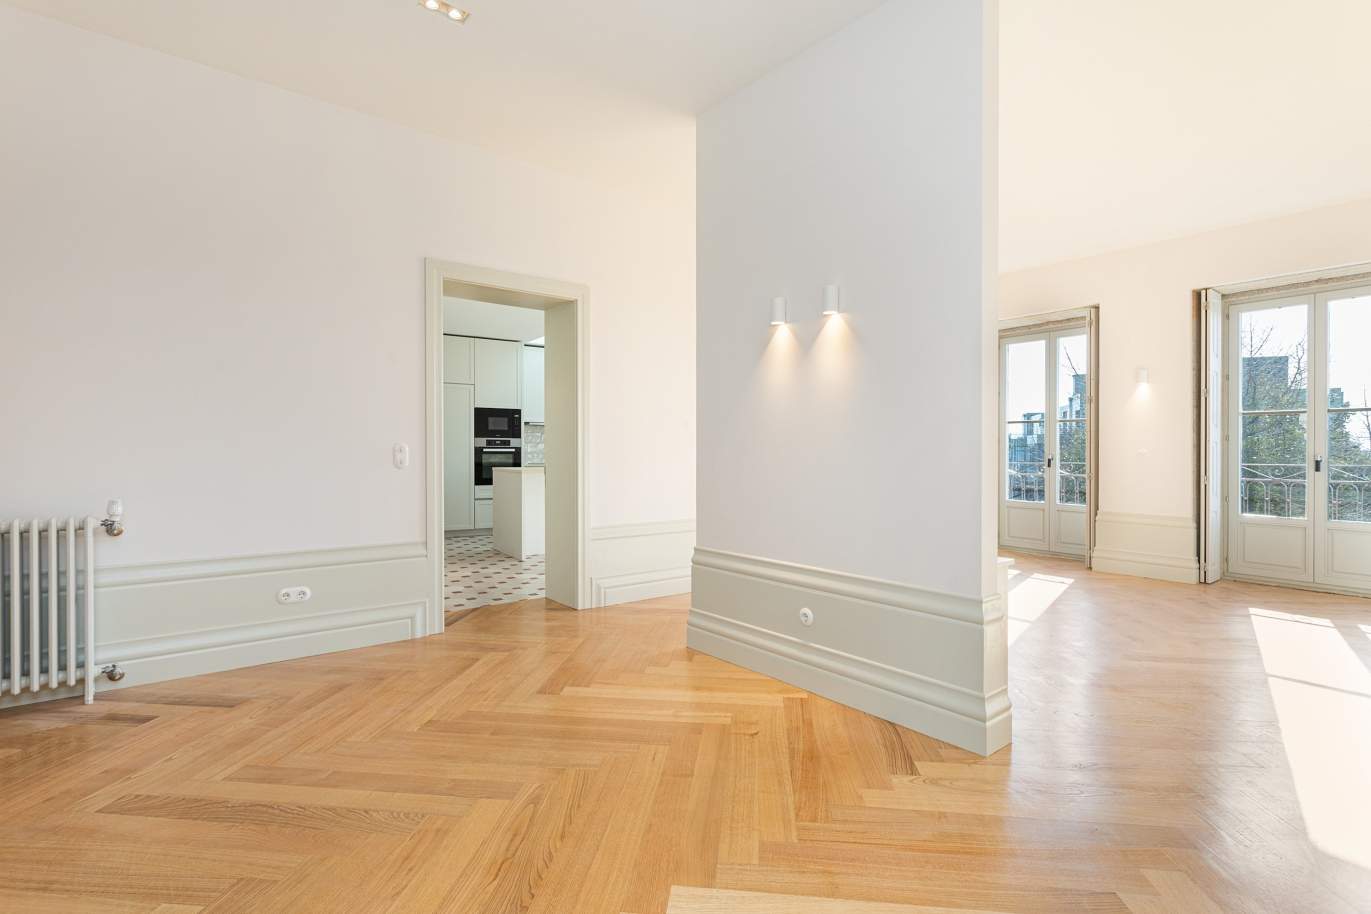 Venda apartamento duplex novo, empreendimento de luxo, Cedofeita, Porto_165735